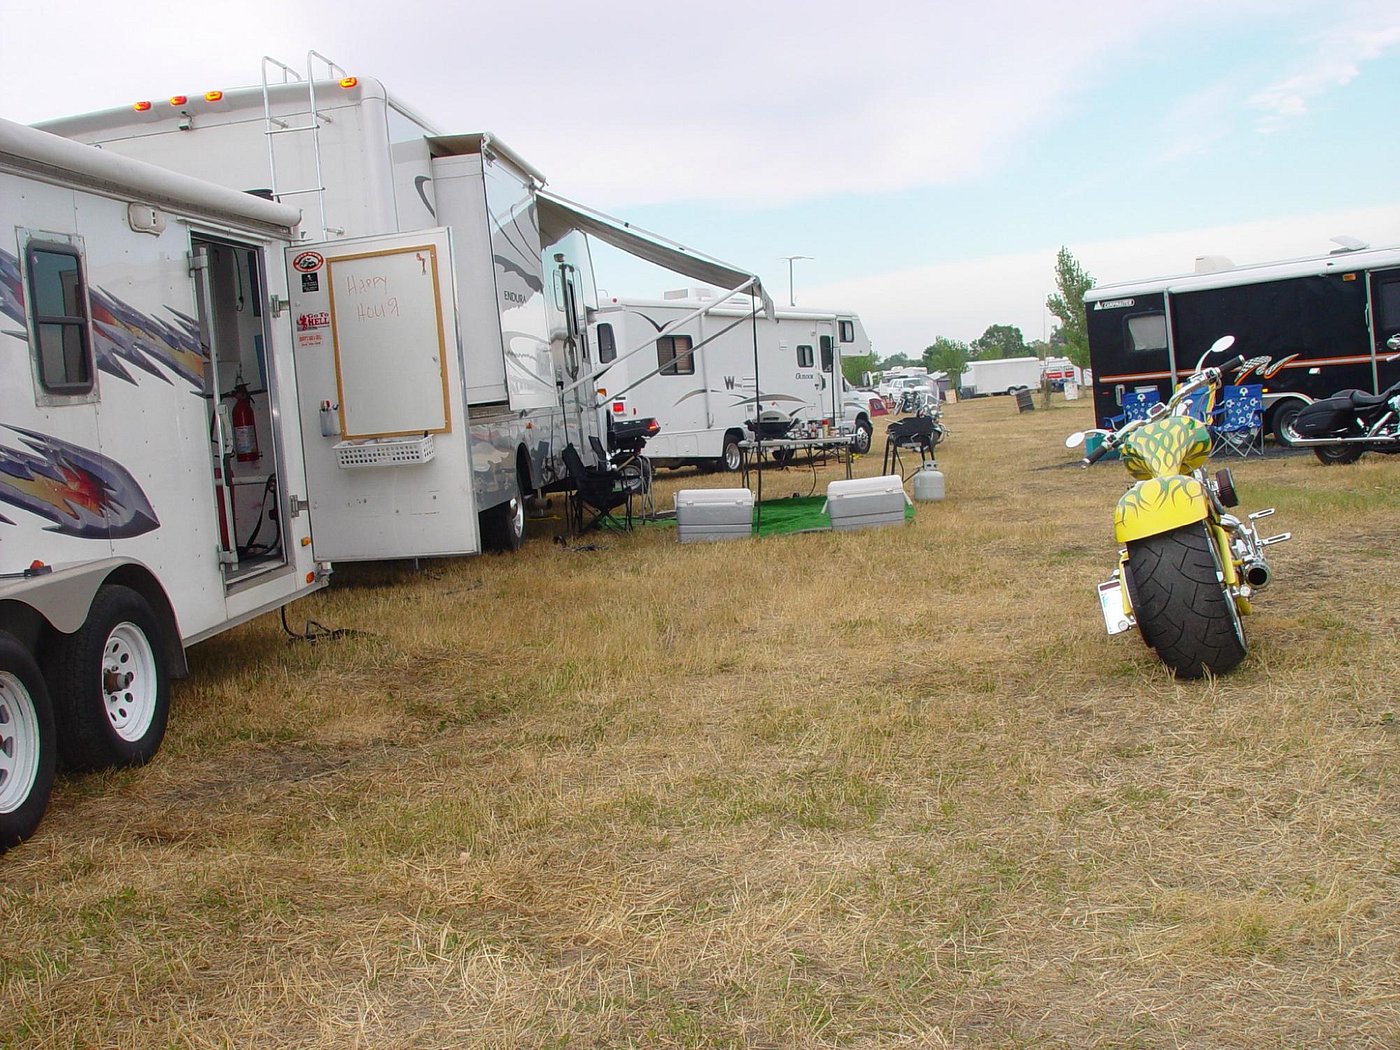 GLENCOE CAMP RESORT (Sturgis) Campground Reviews & Photos Tripadvisor